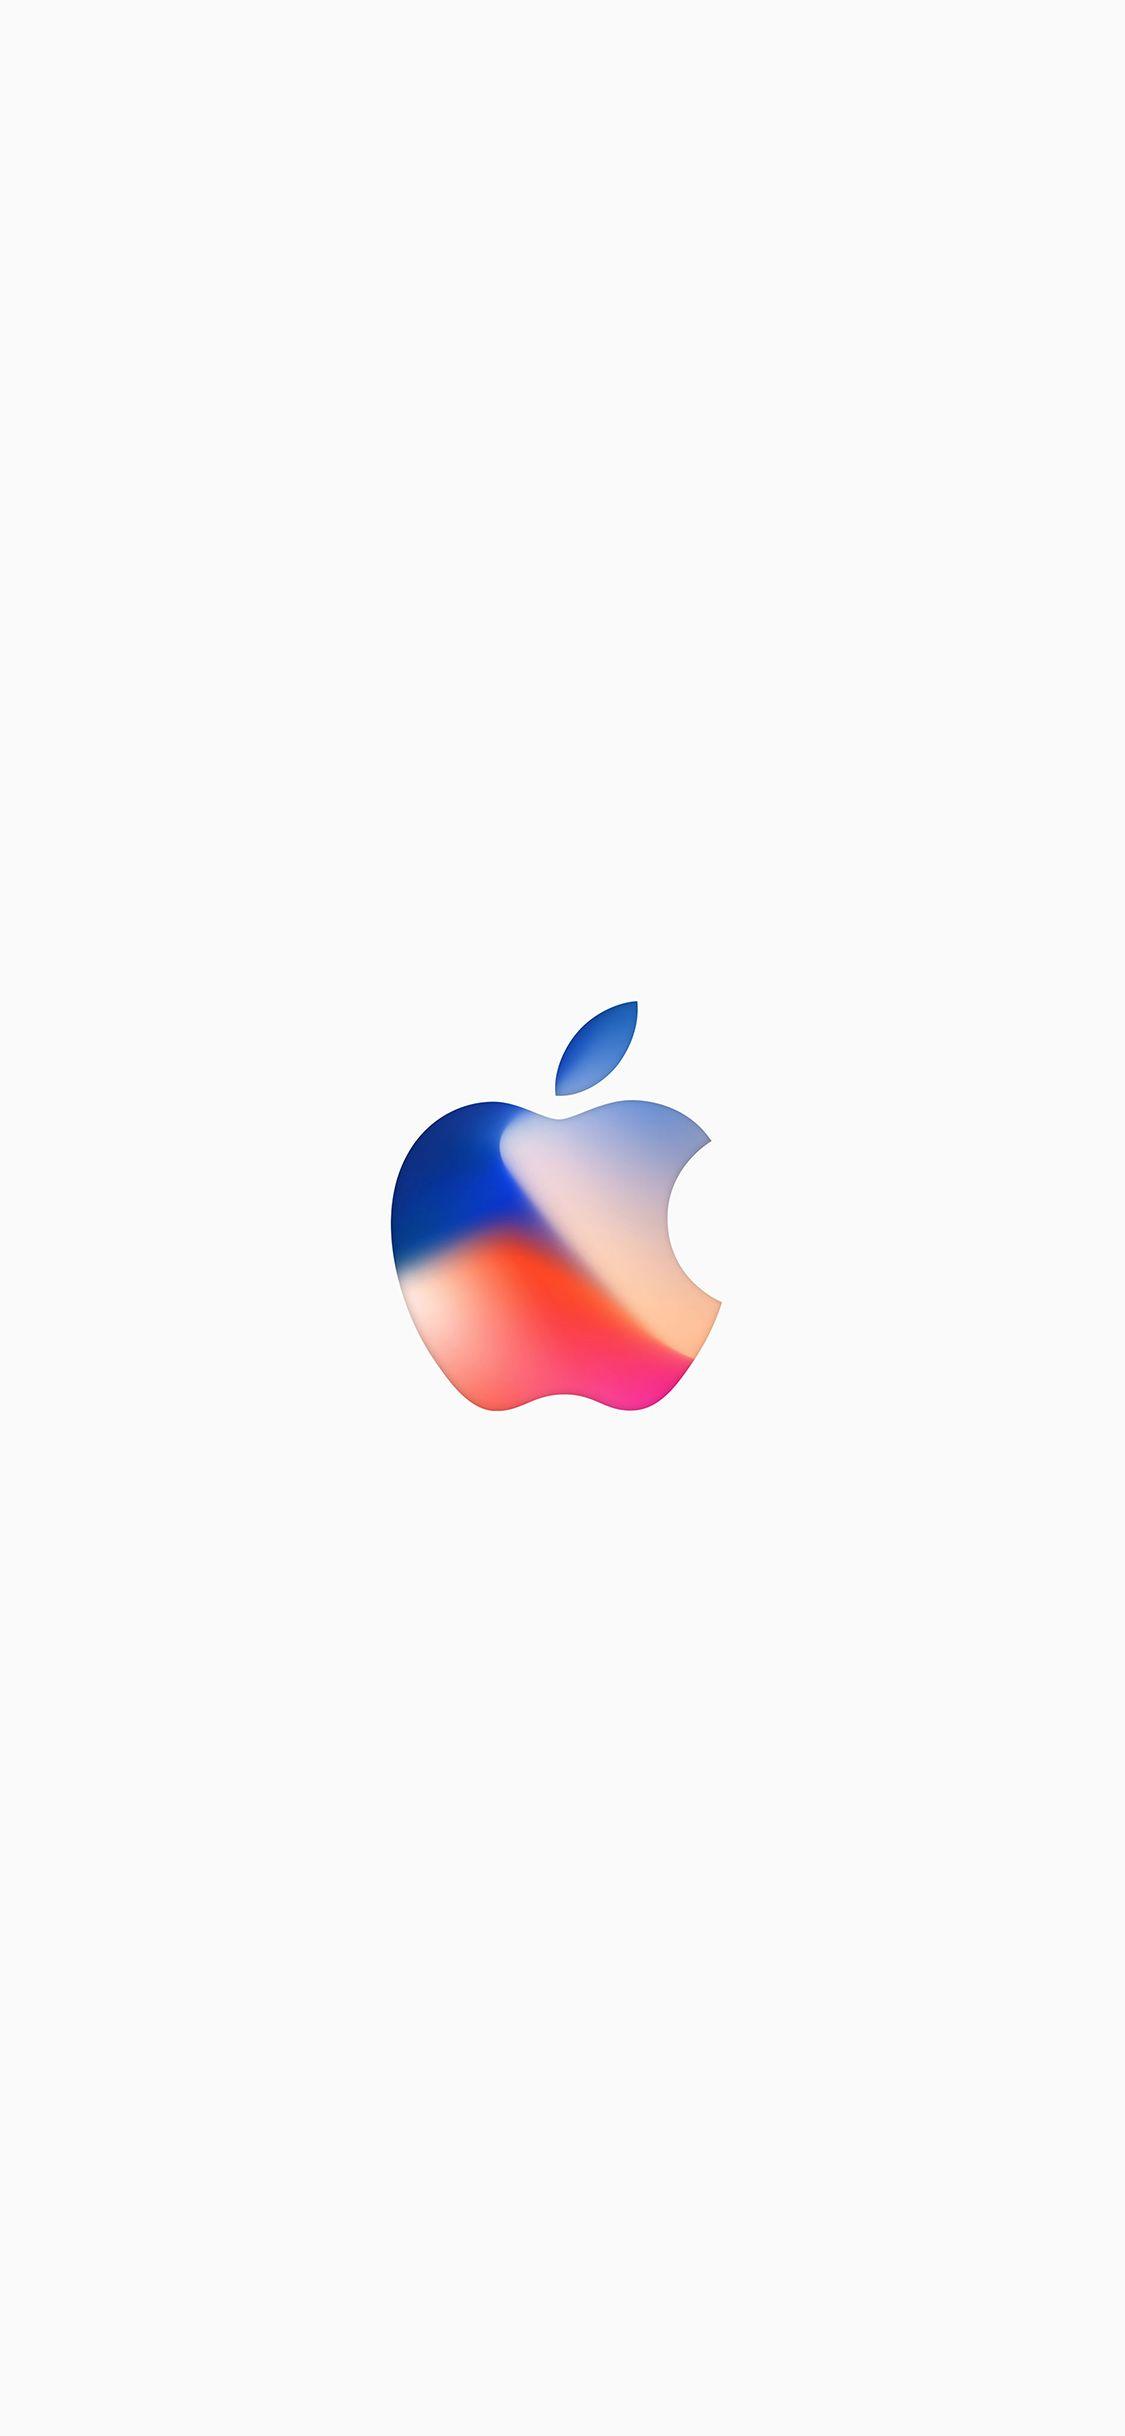 iPhone X Logo - iPhoneXpapers.com | iPhone X wallpaper | bb78-apple-iphonex-logo ...